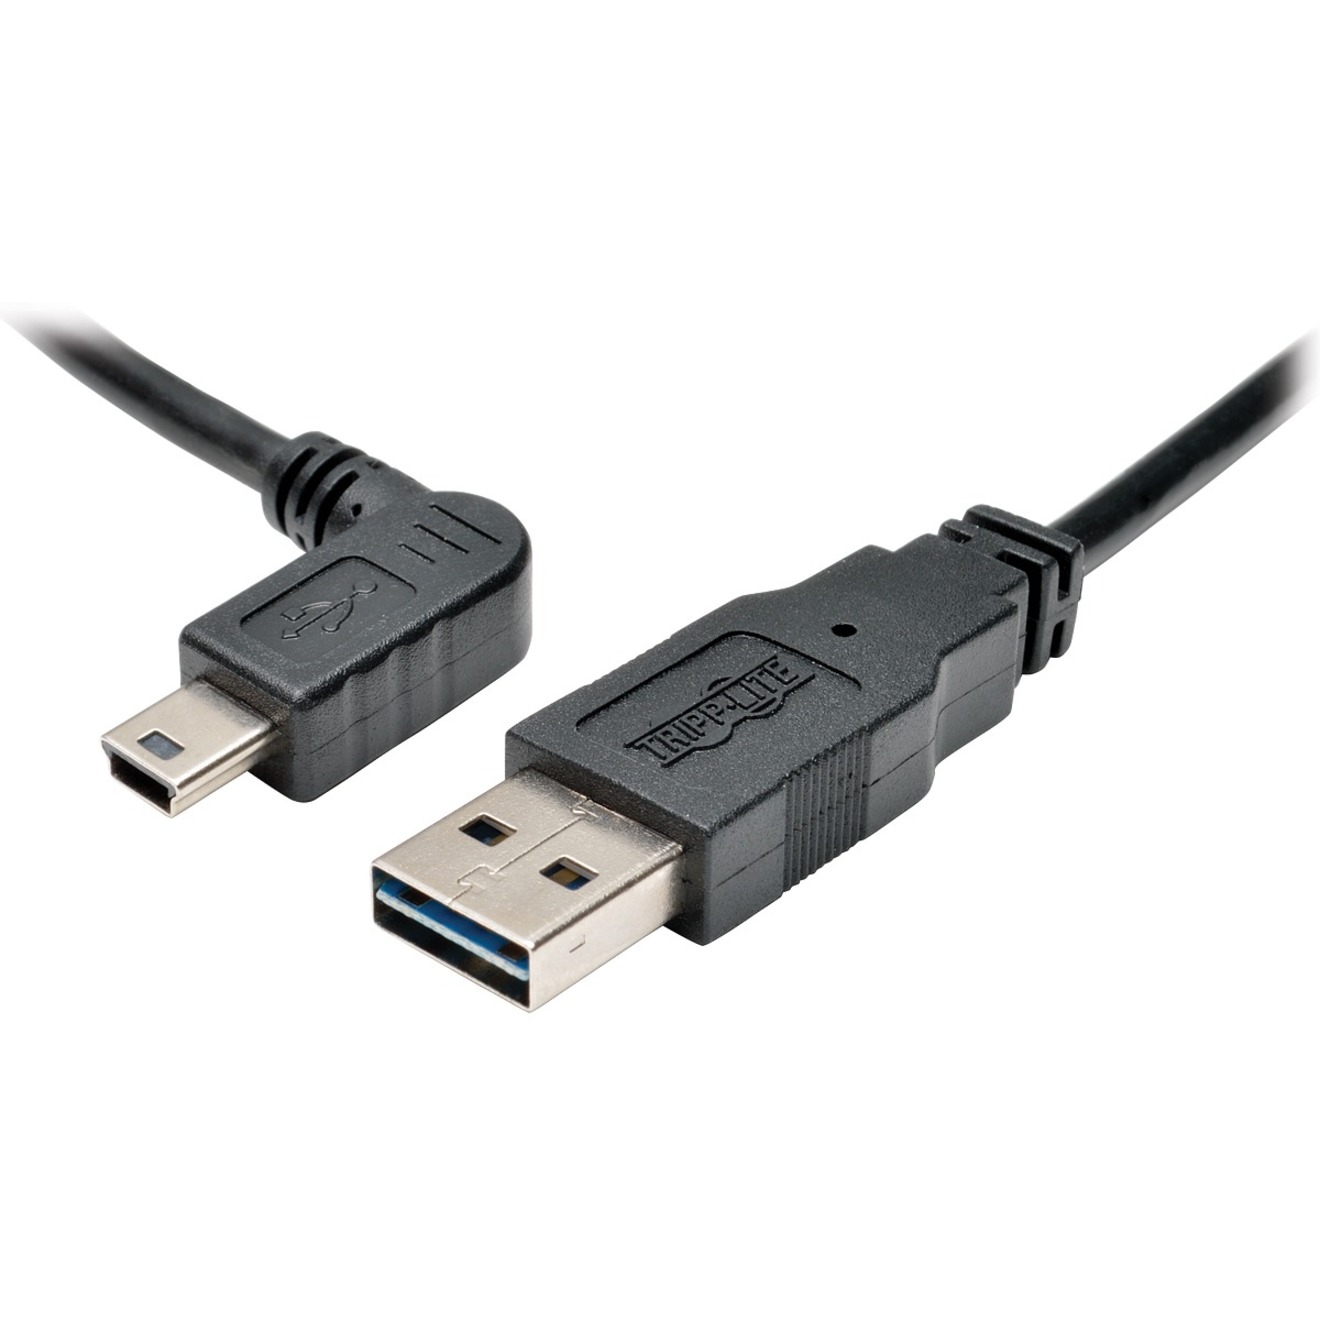 Tripp Lite UR030-006-LAB USB Data Transfer Cable - image 2 of 2